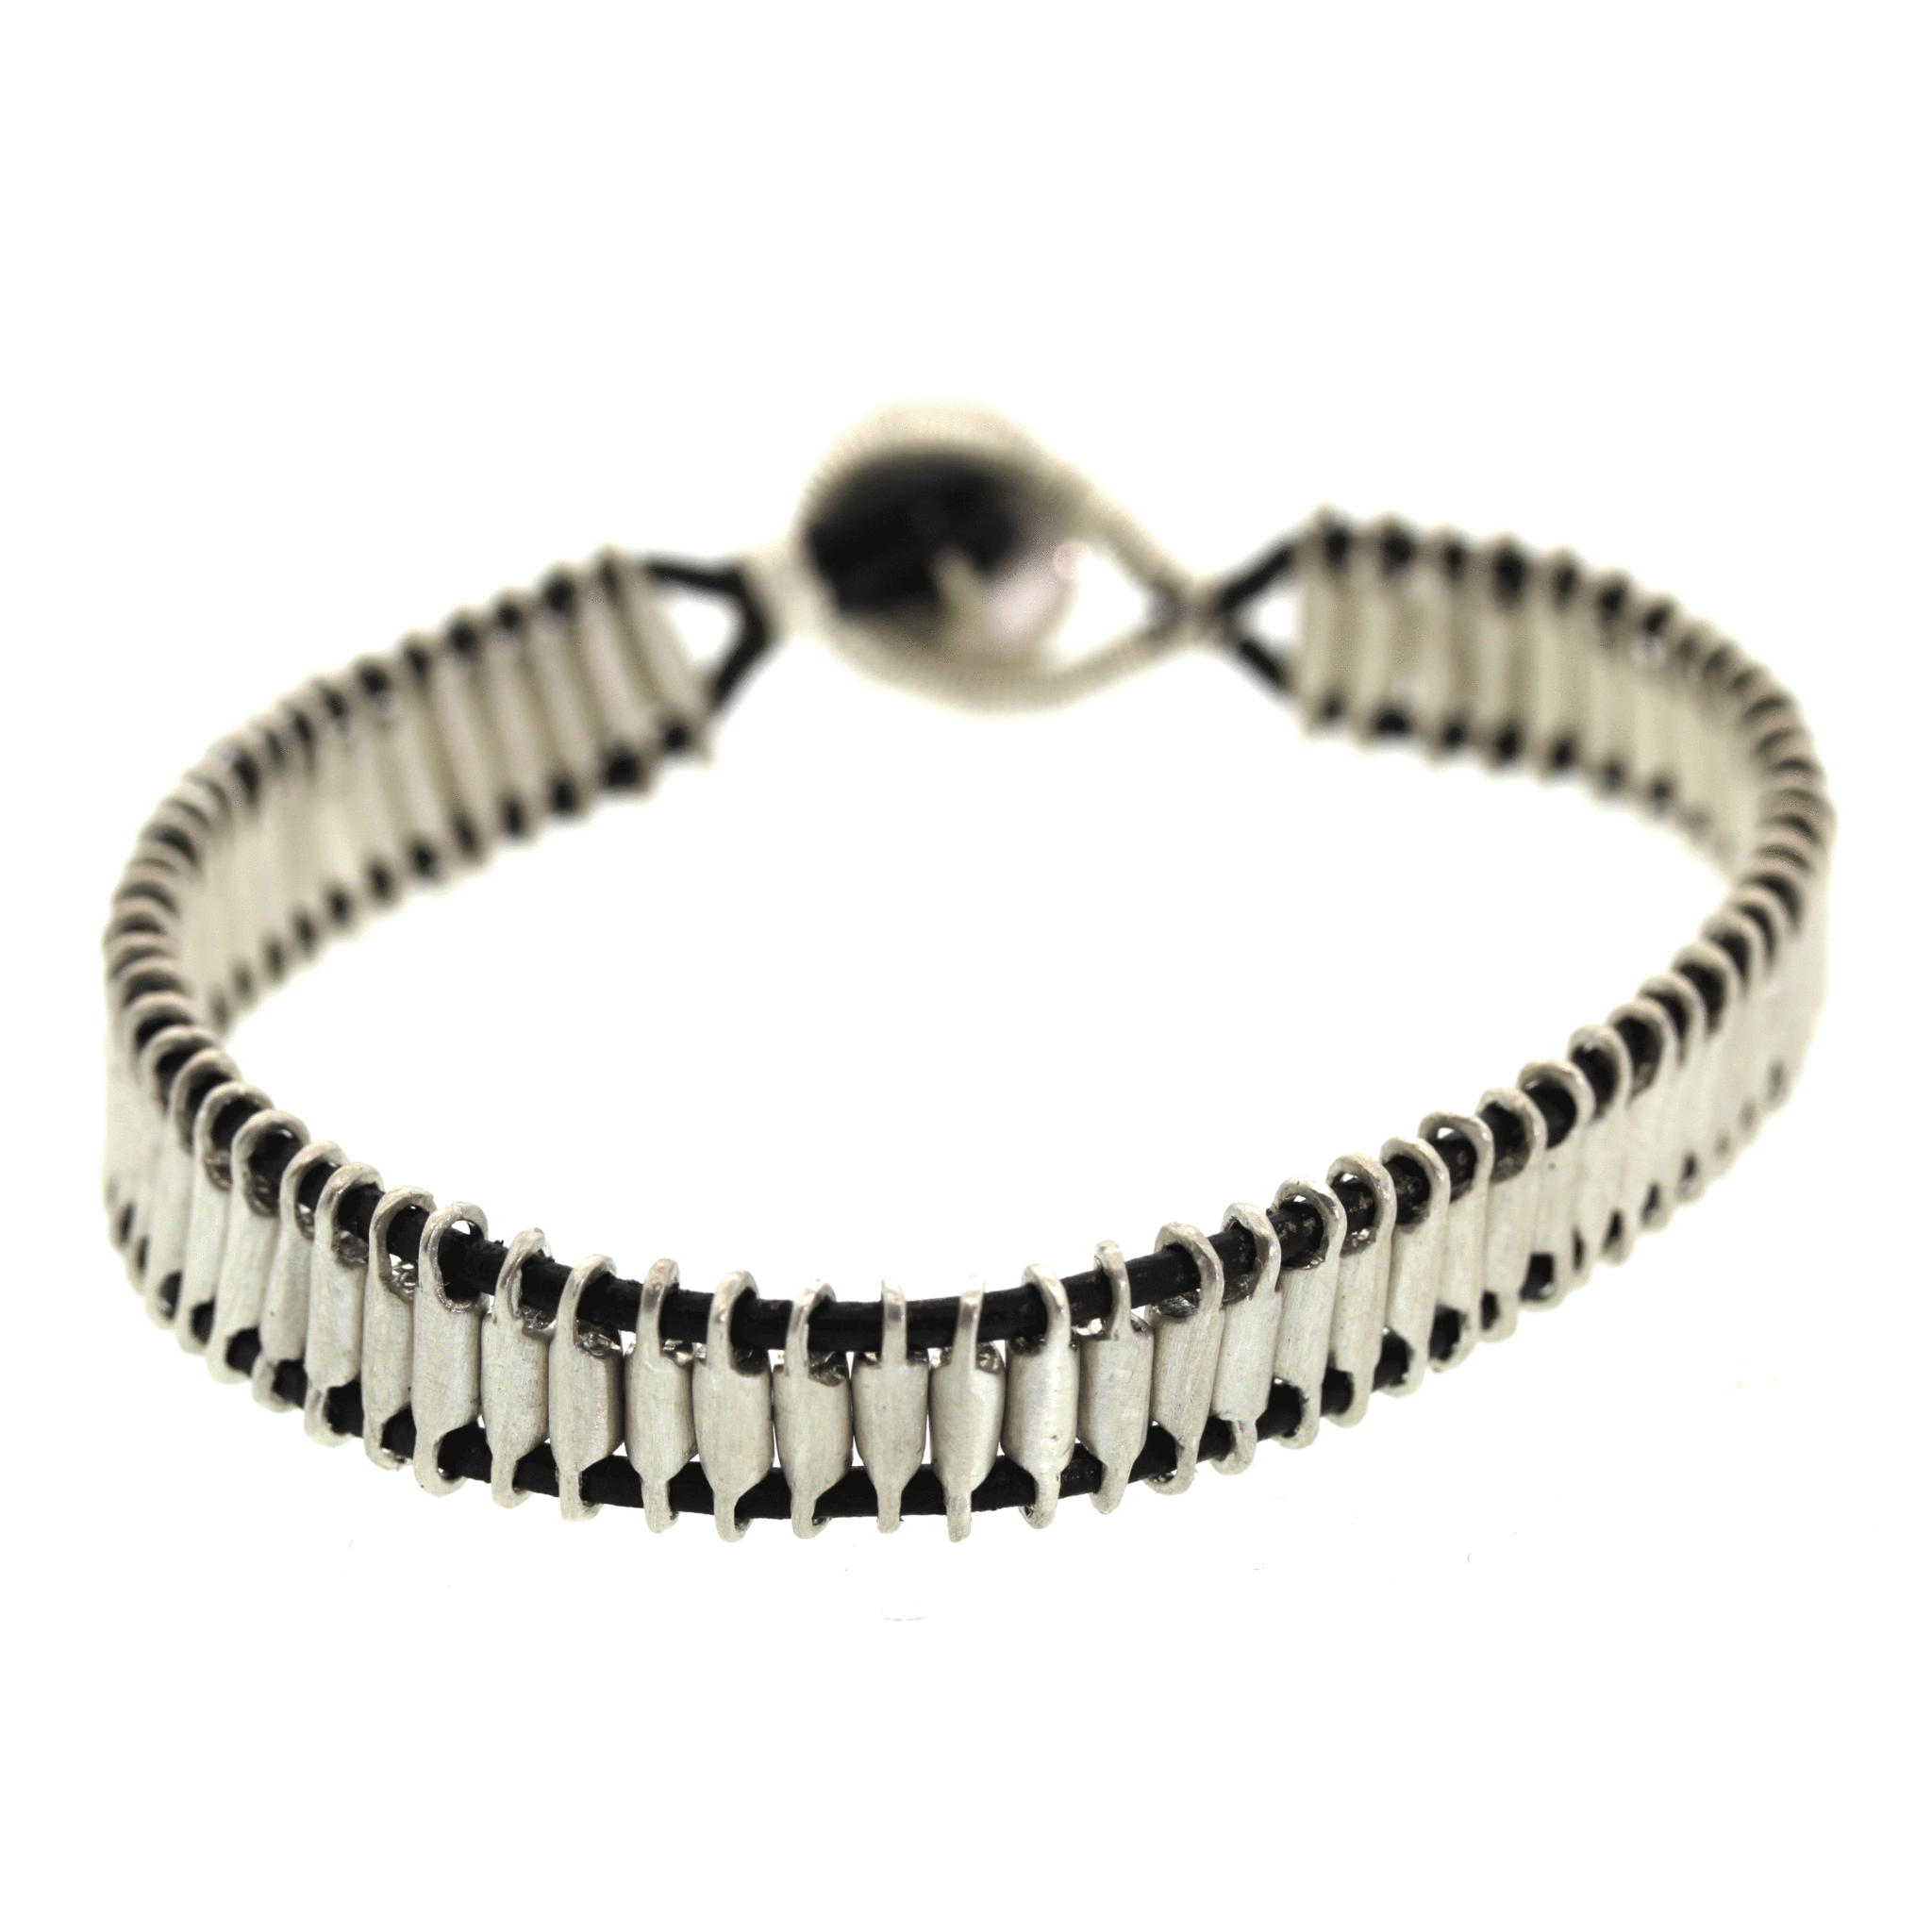 Silver Bar Bracelet - men's jewelry - Rebecca Lankford Designs - Houston, TX